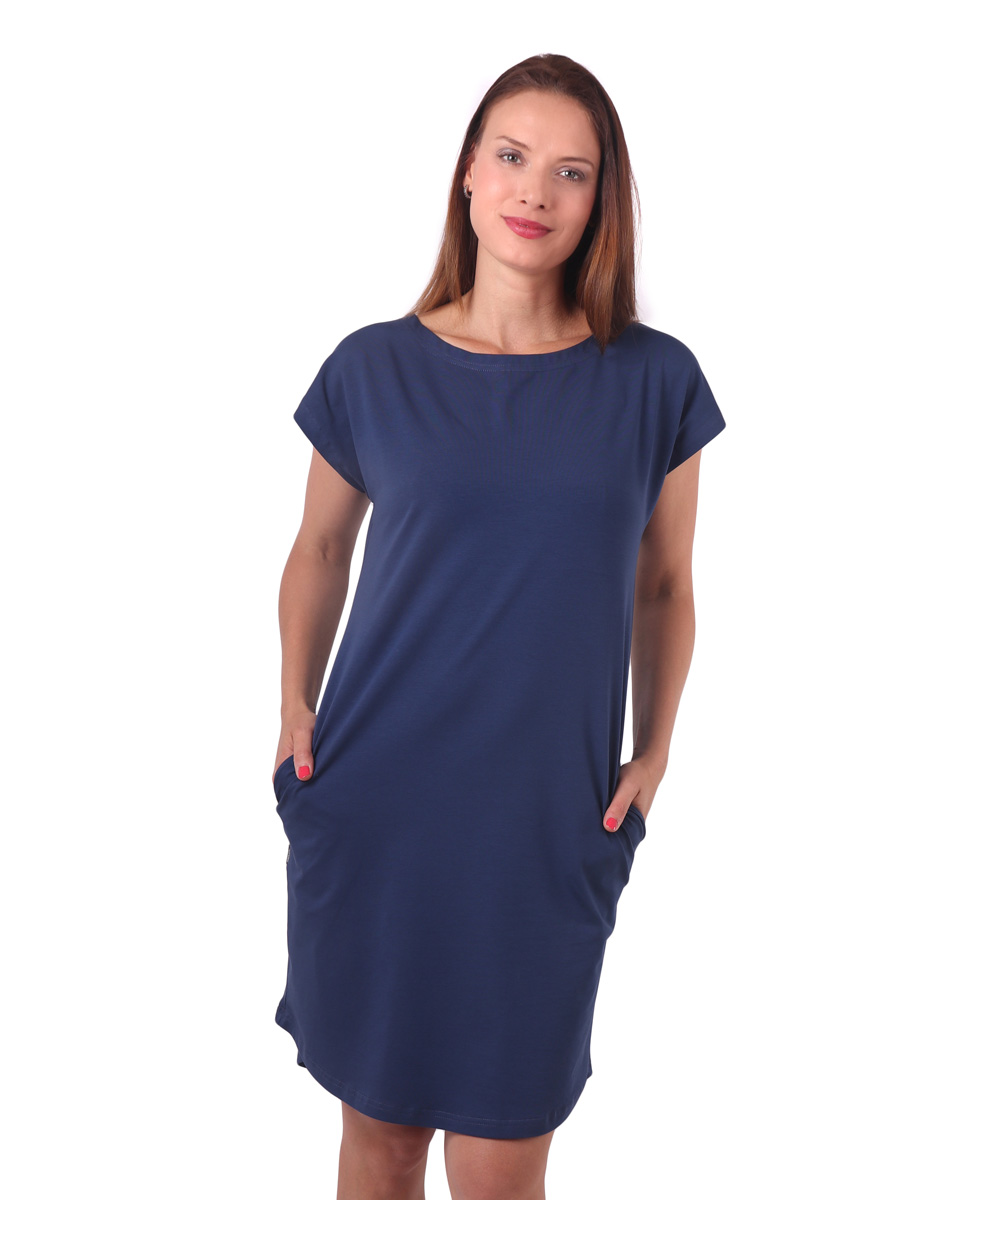 Women's dress with pockets Zoe, oversized loose fit, jeans blue